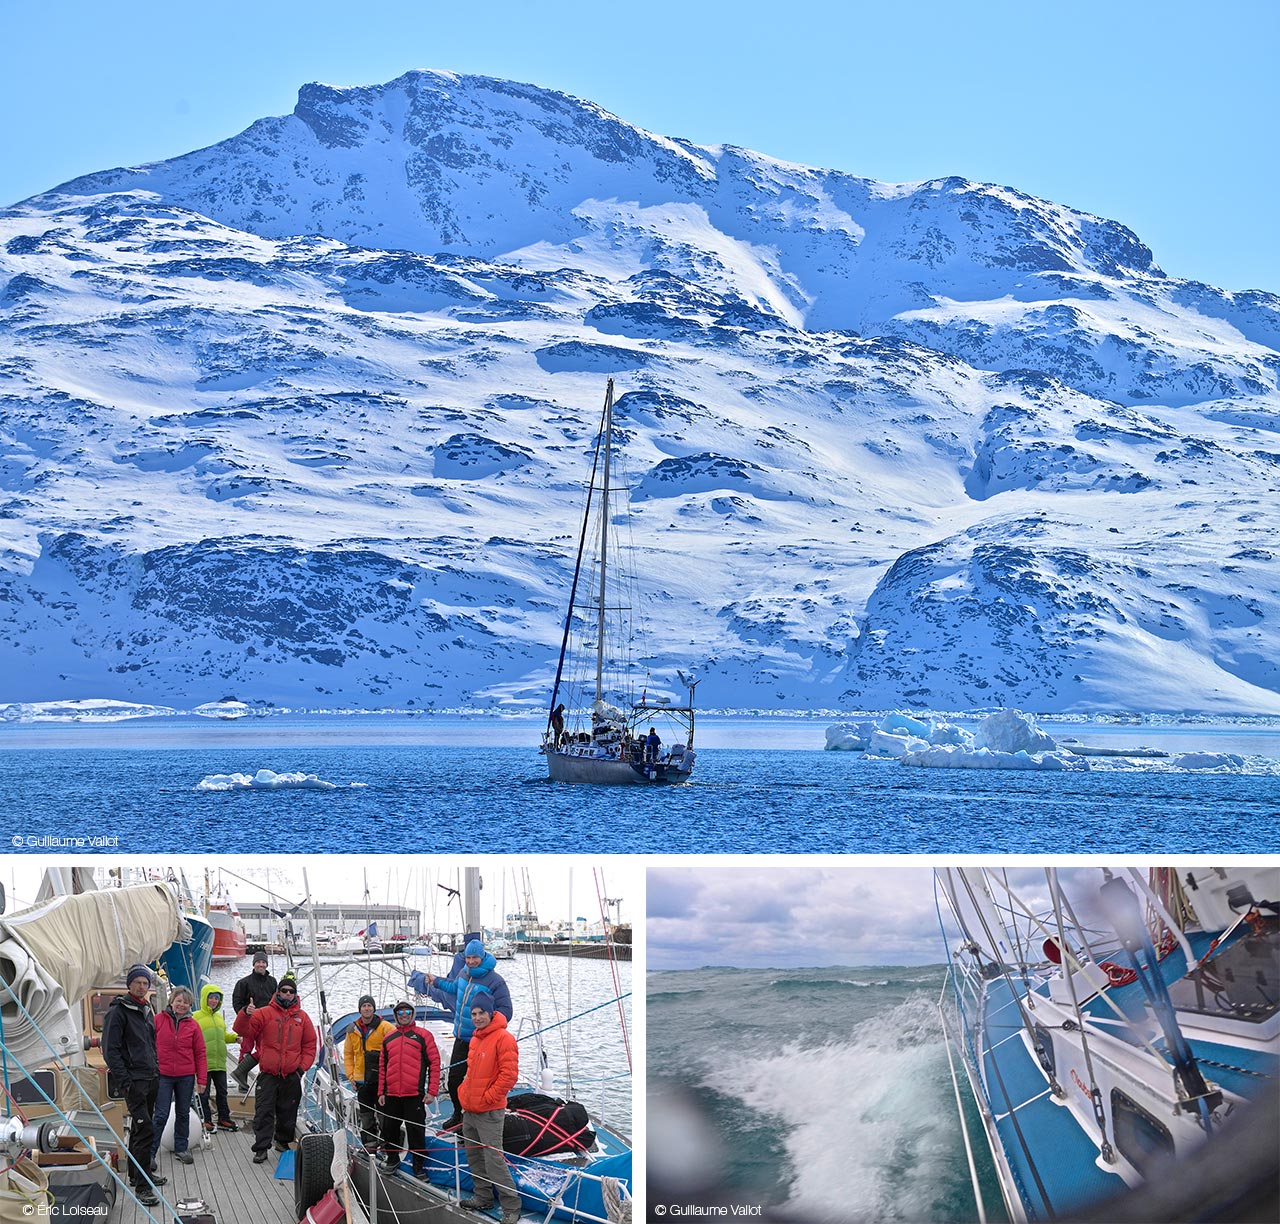 Maewan Adventure Base - Ski-expedition in Greenland - Part 1